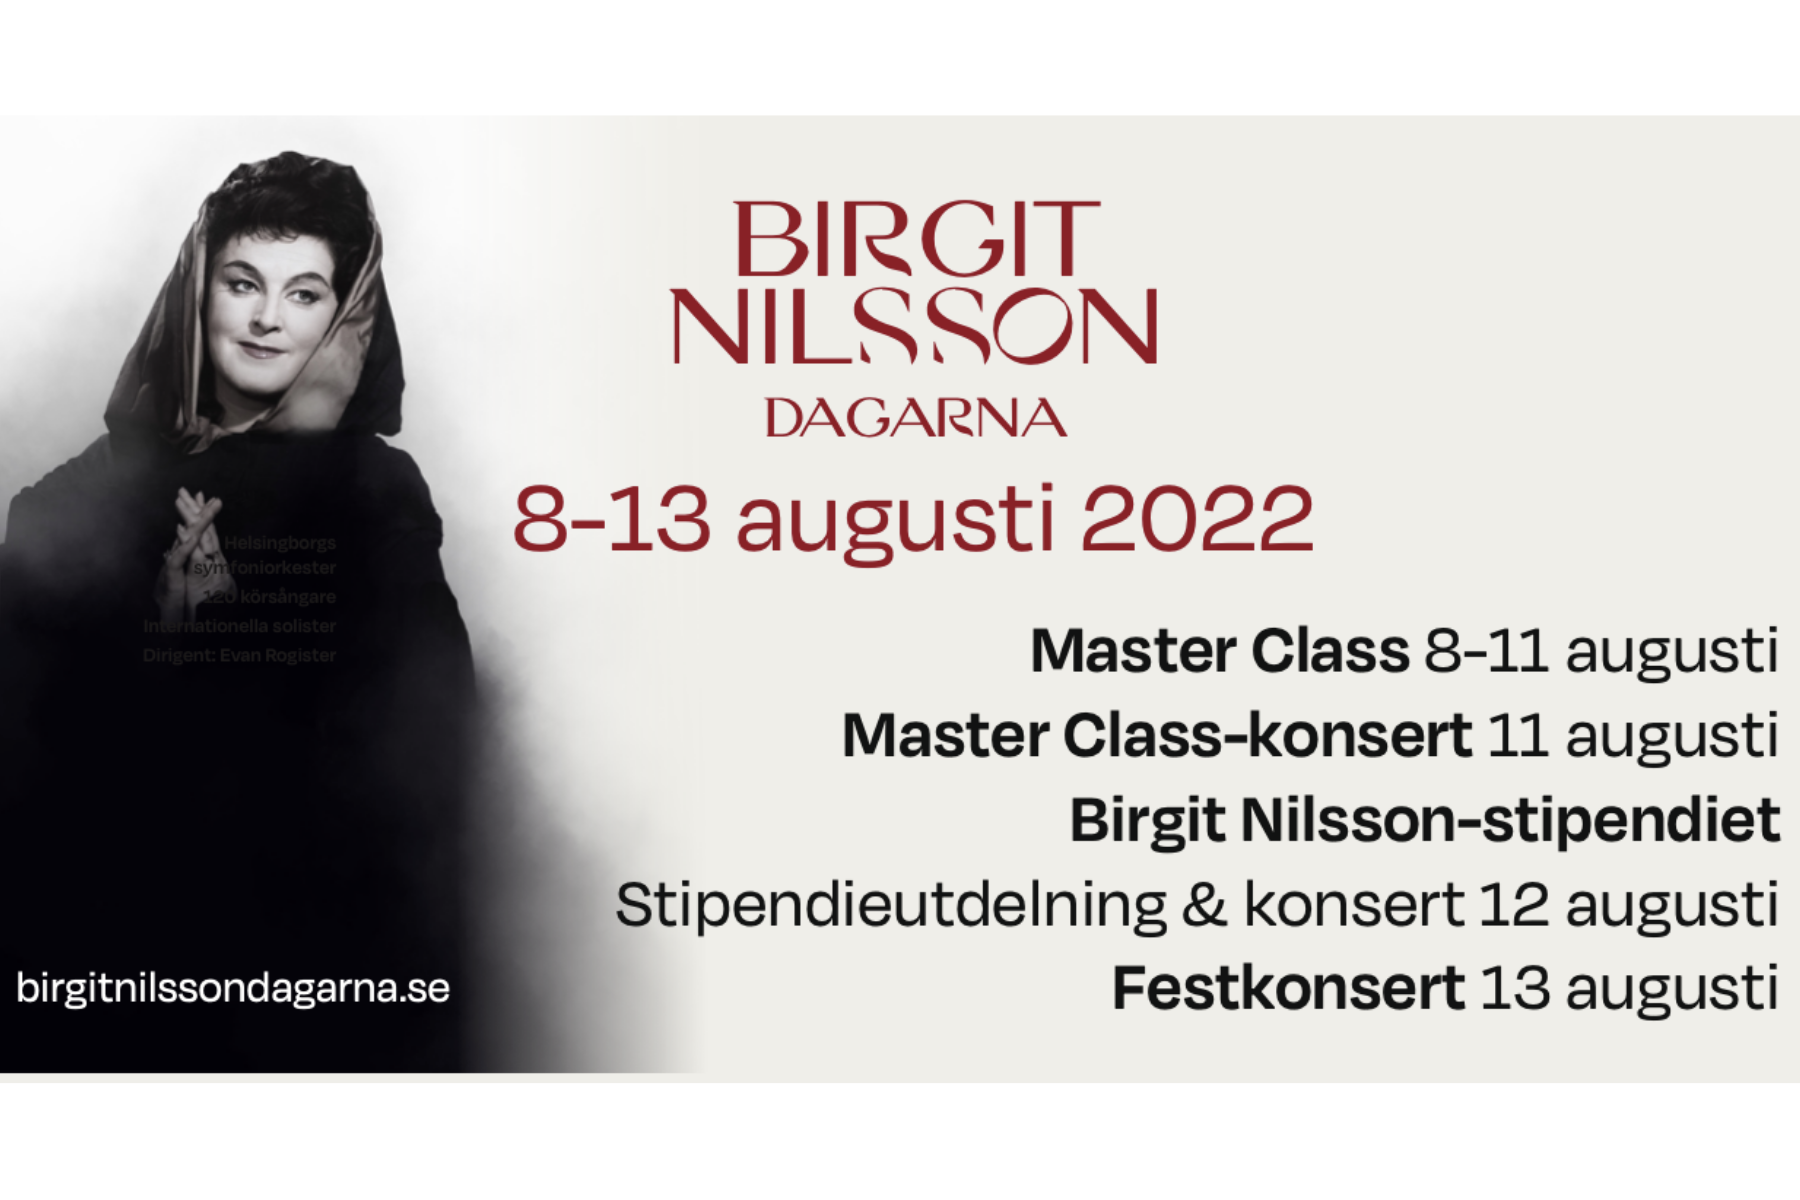 You are currently viewing Birgit Nilsson-dagarna 8-13 augusti